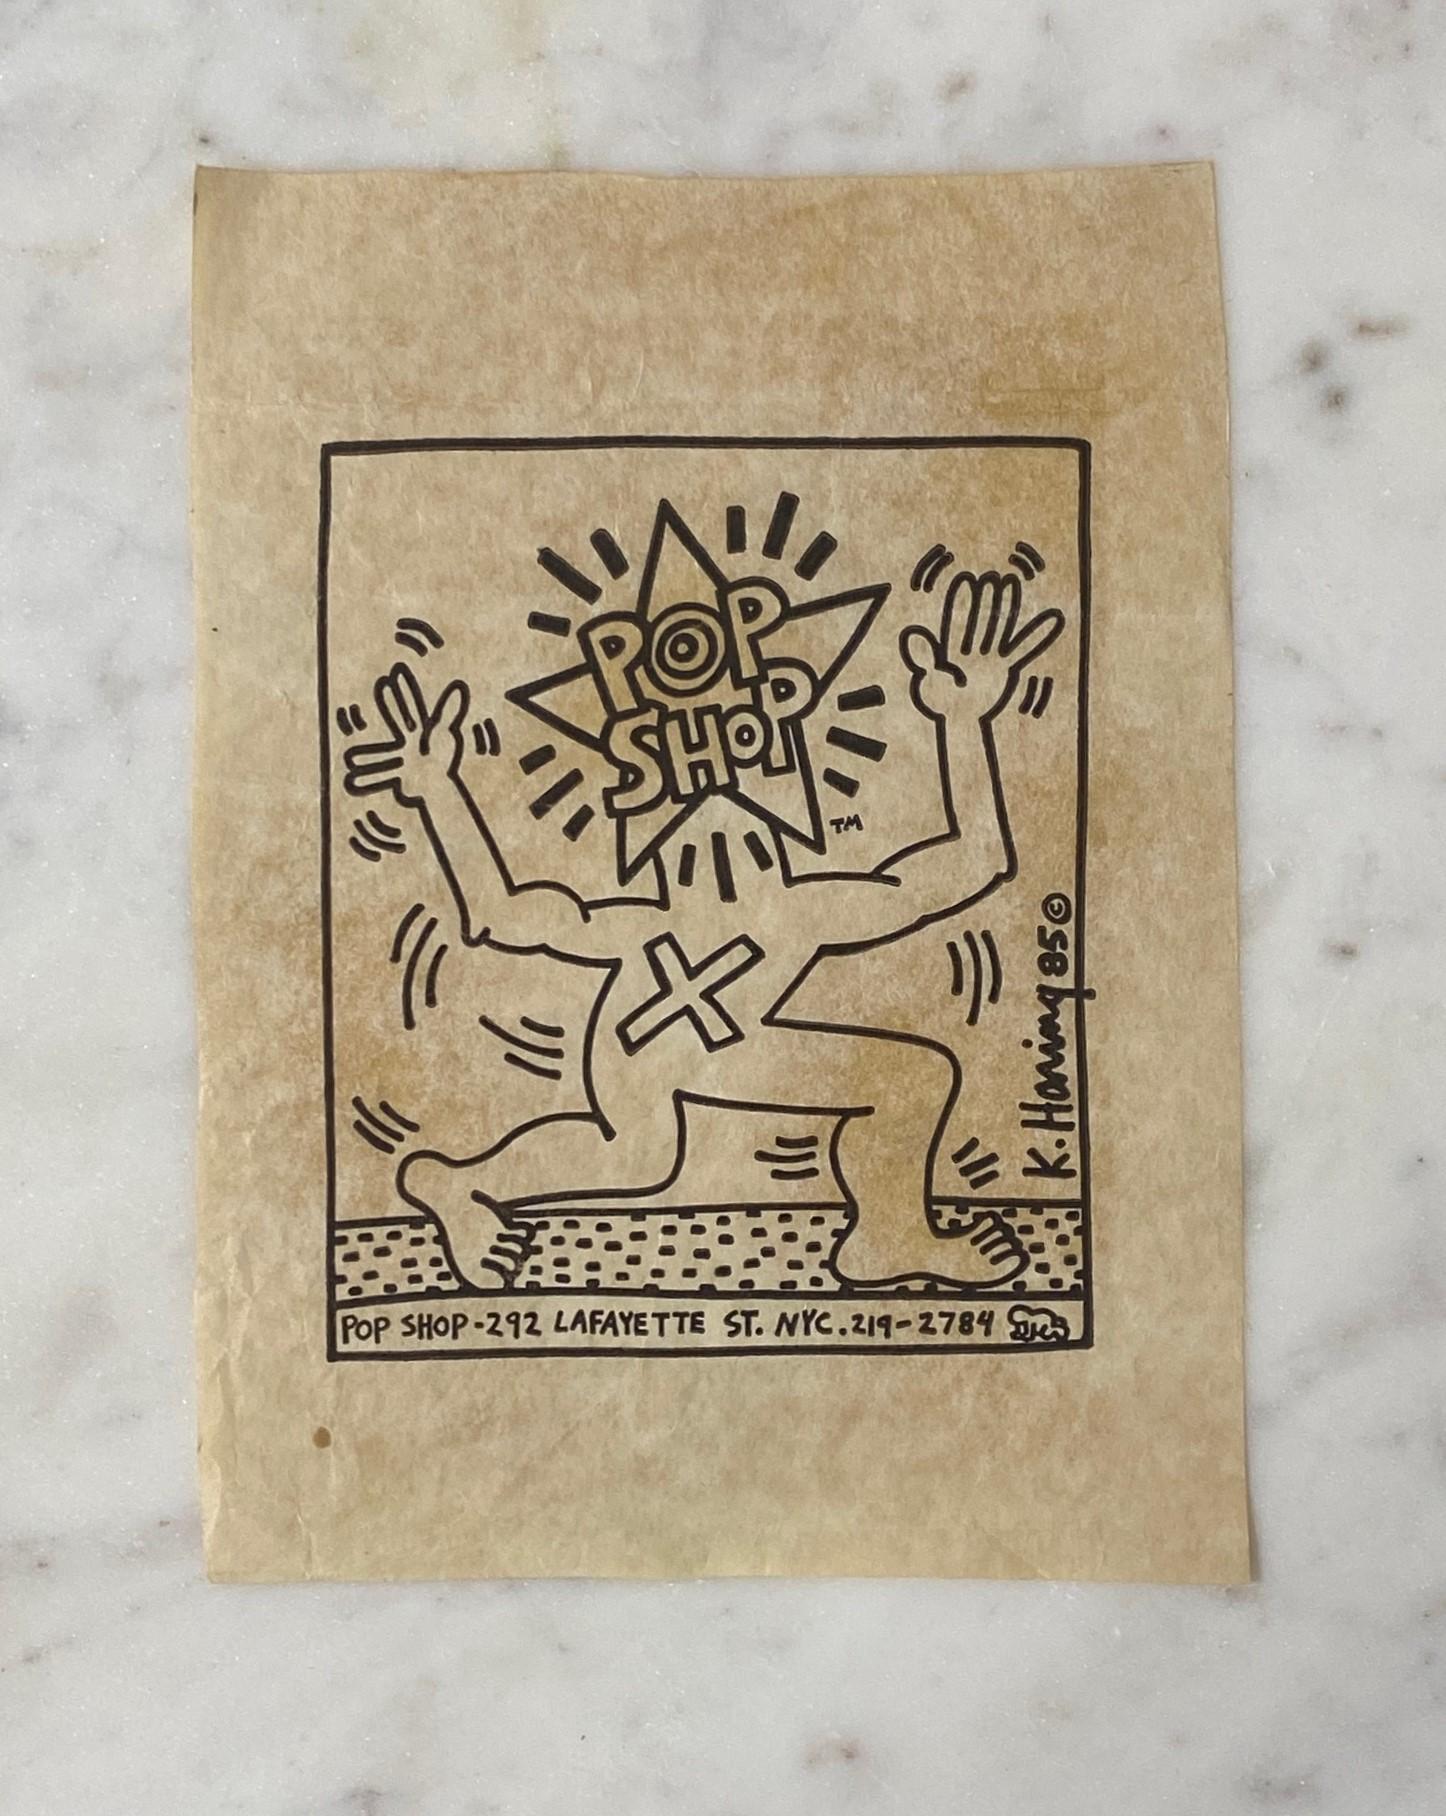 Keith Haring Original New York City Pop Shop Lithograph Bag With Bonus, 1980s For Sale 2